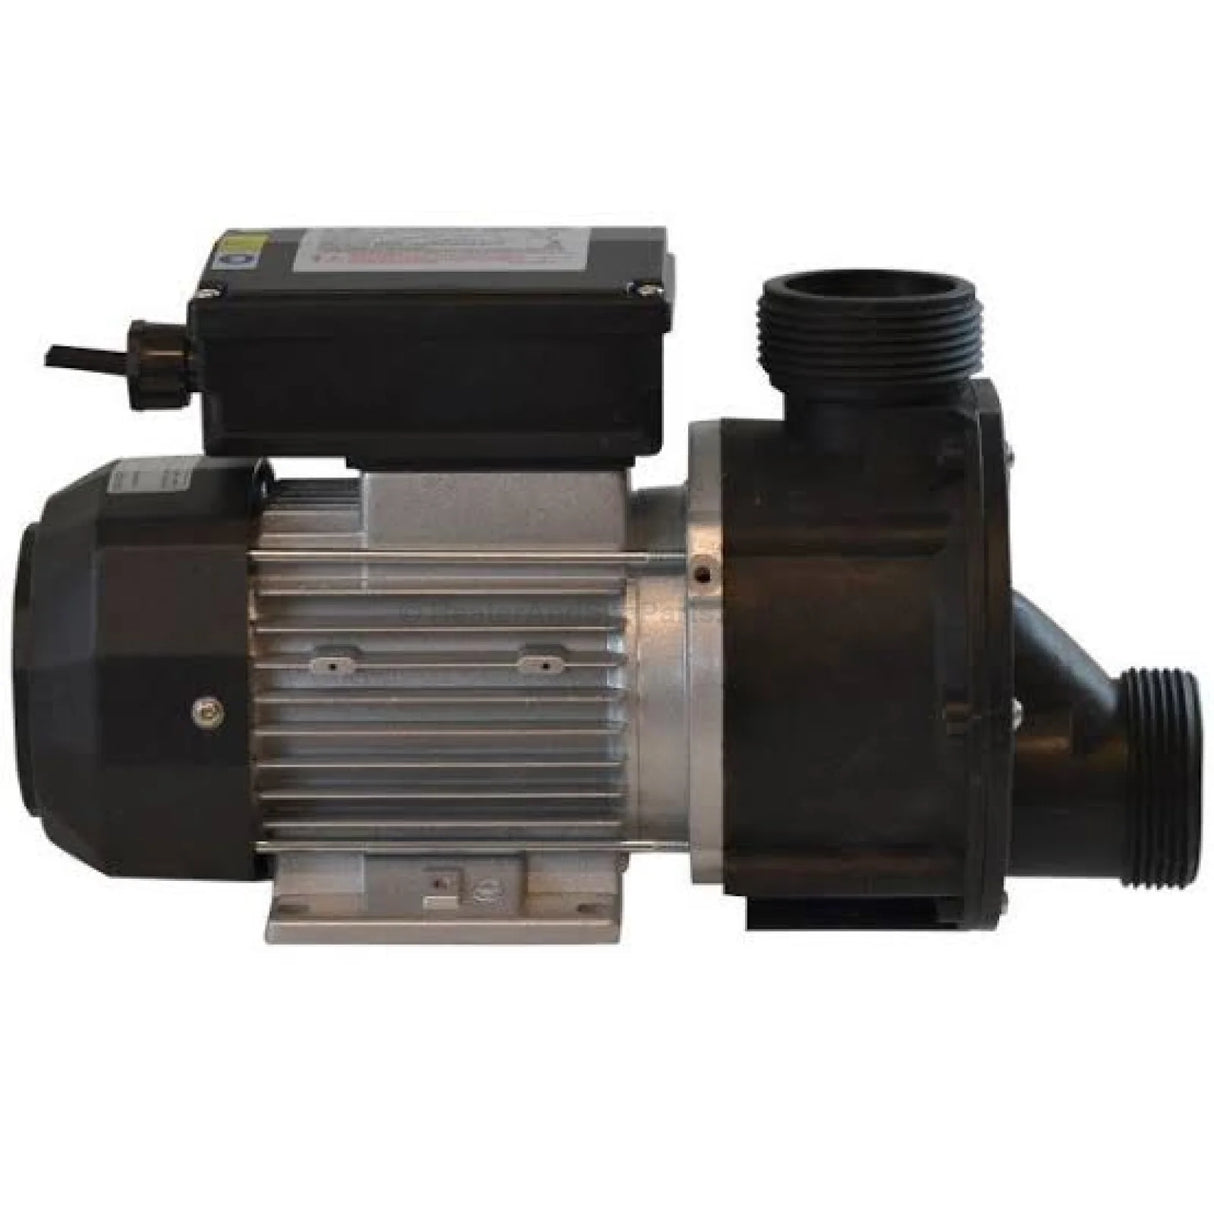 LX Whirlpool JA50 spa circulation pump 0.5hp, 375w - Heater and Spa Parts